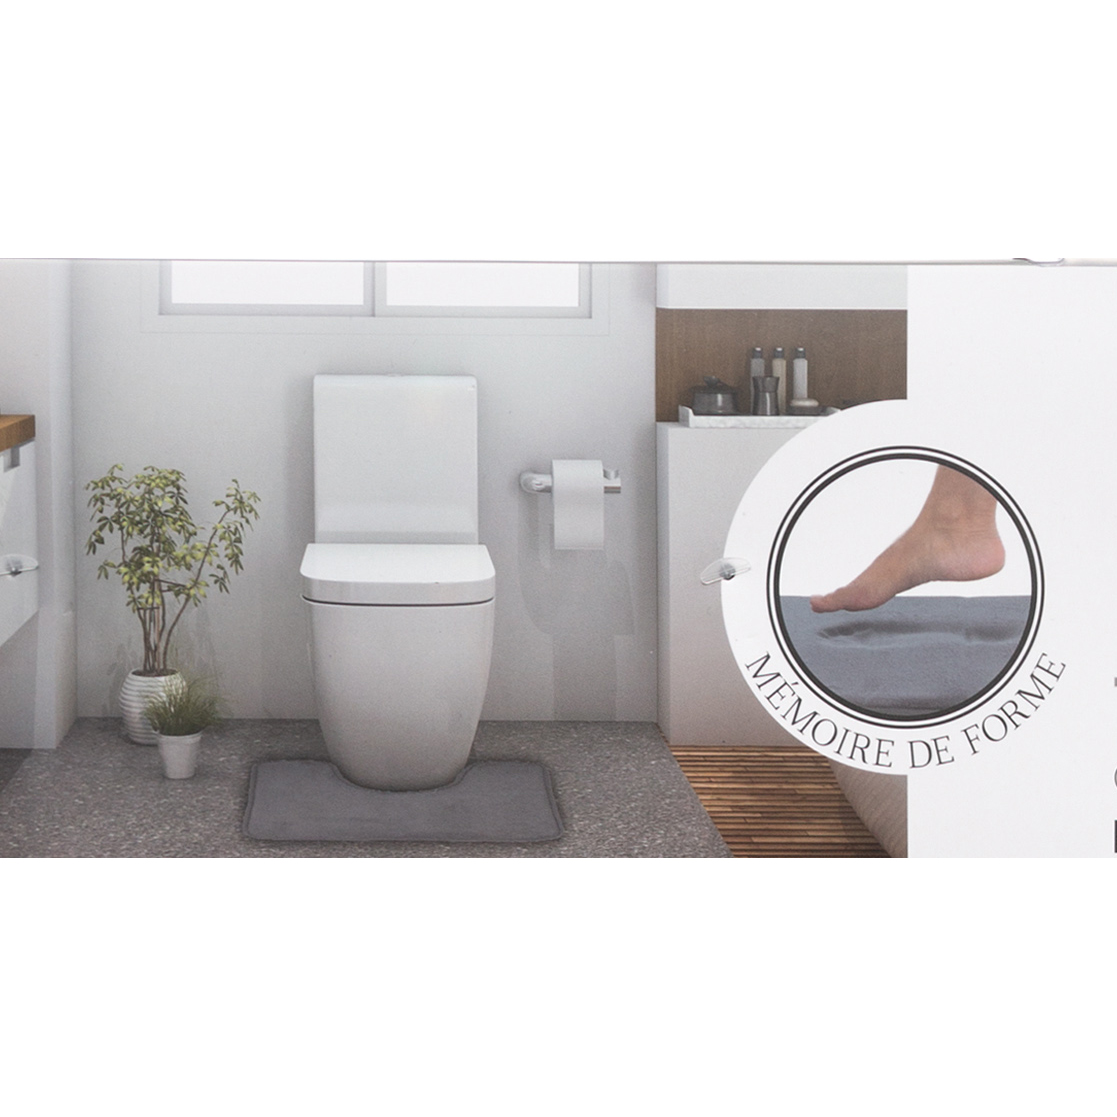  WC Mat  Antislip - Toiletmat Met Uitsparing - 48 x 48 cm - Grijs